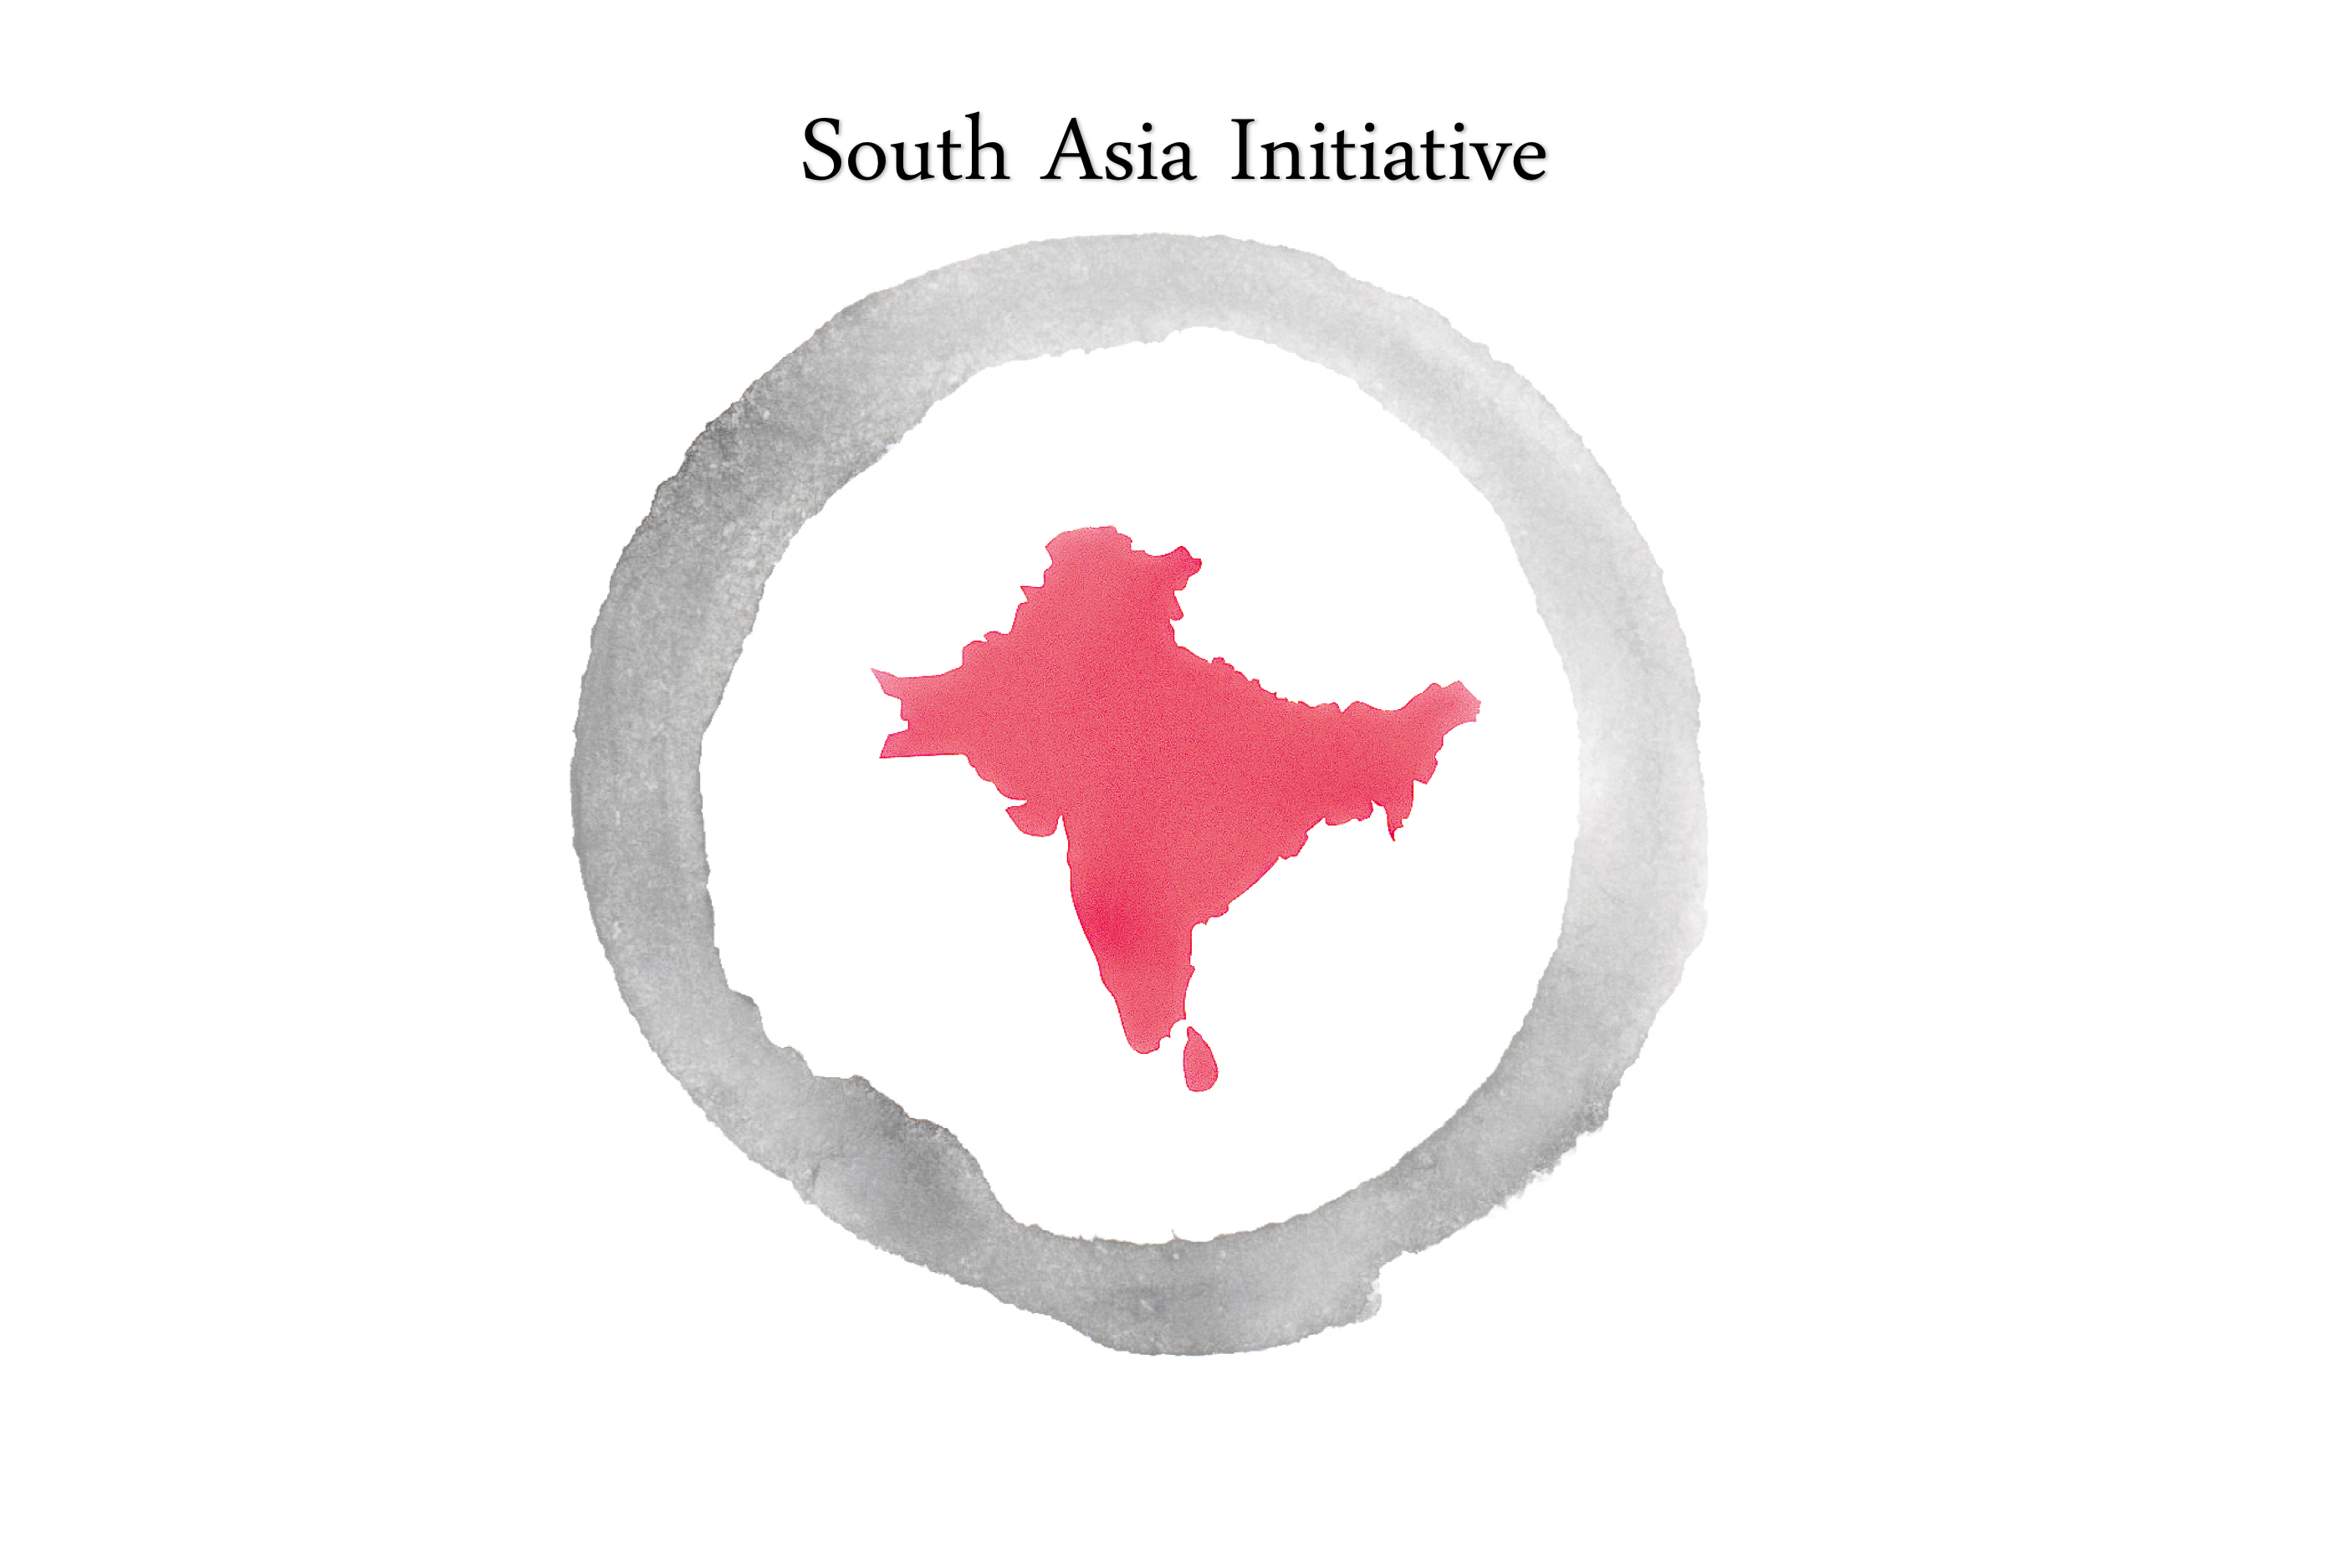 The South Asia Initiative